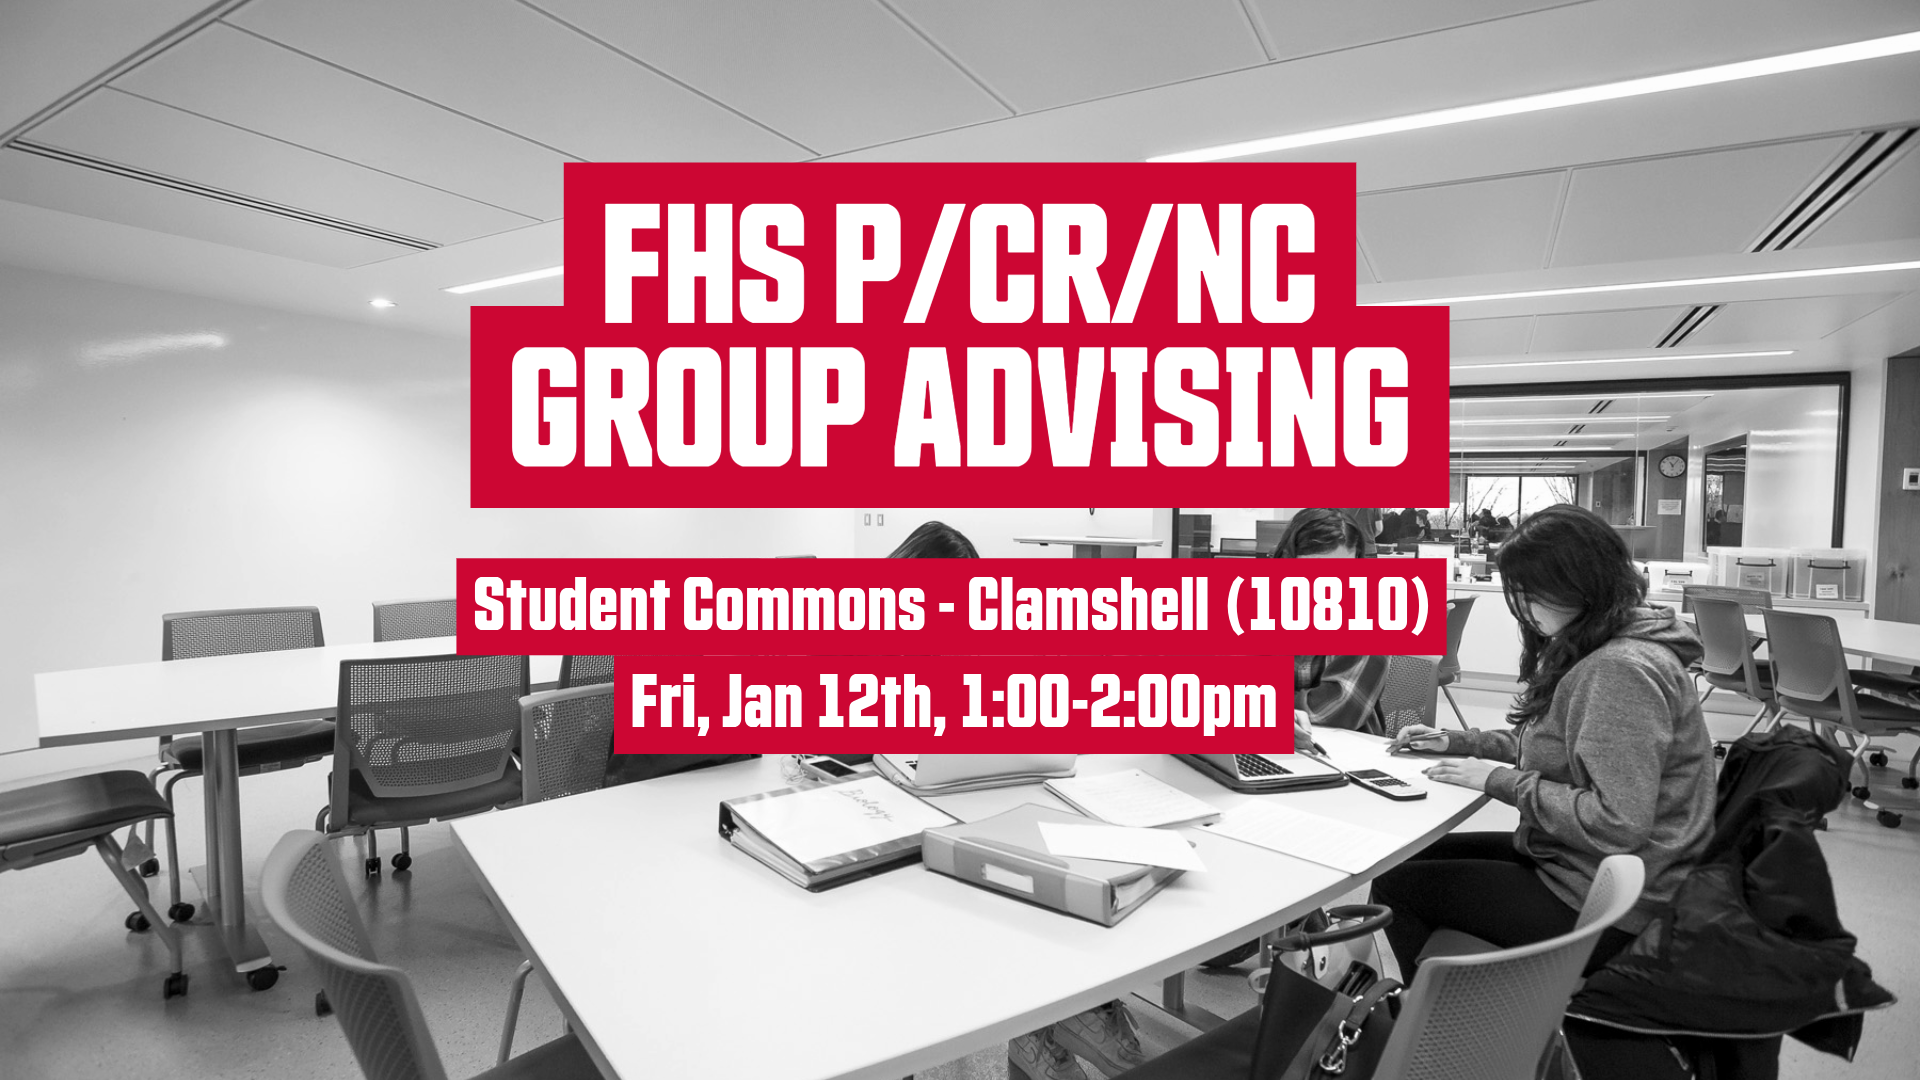 Friday, Jan 12: FHS P/CR/NC Group Advising